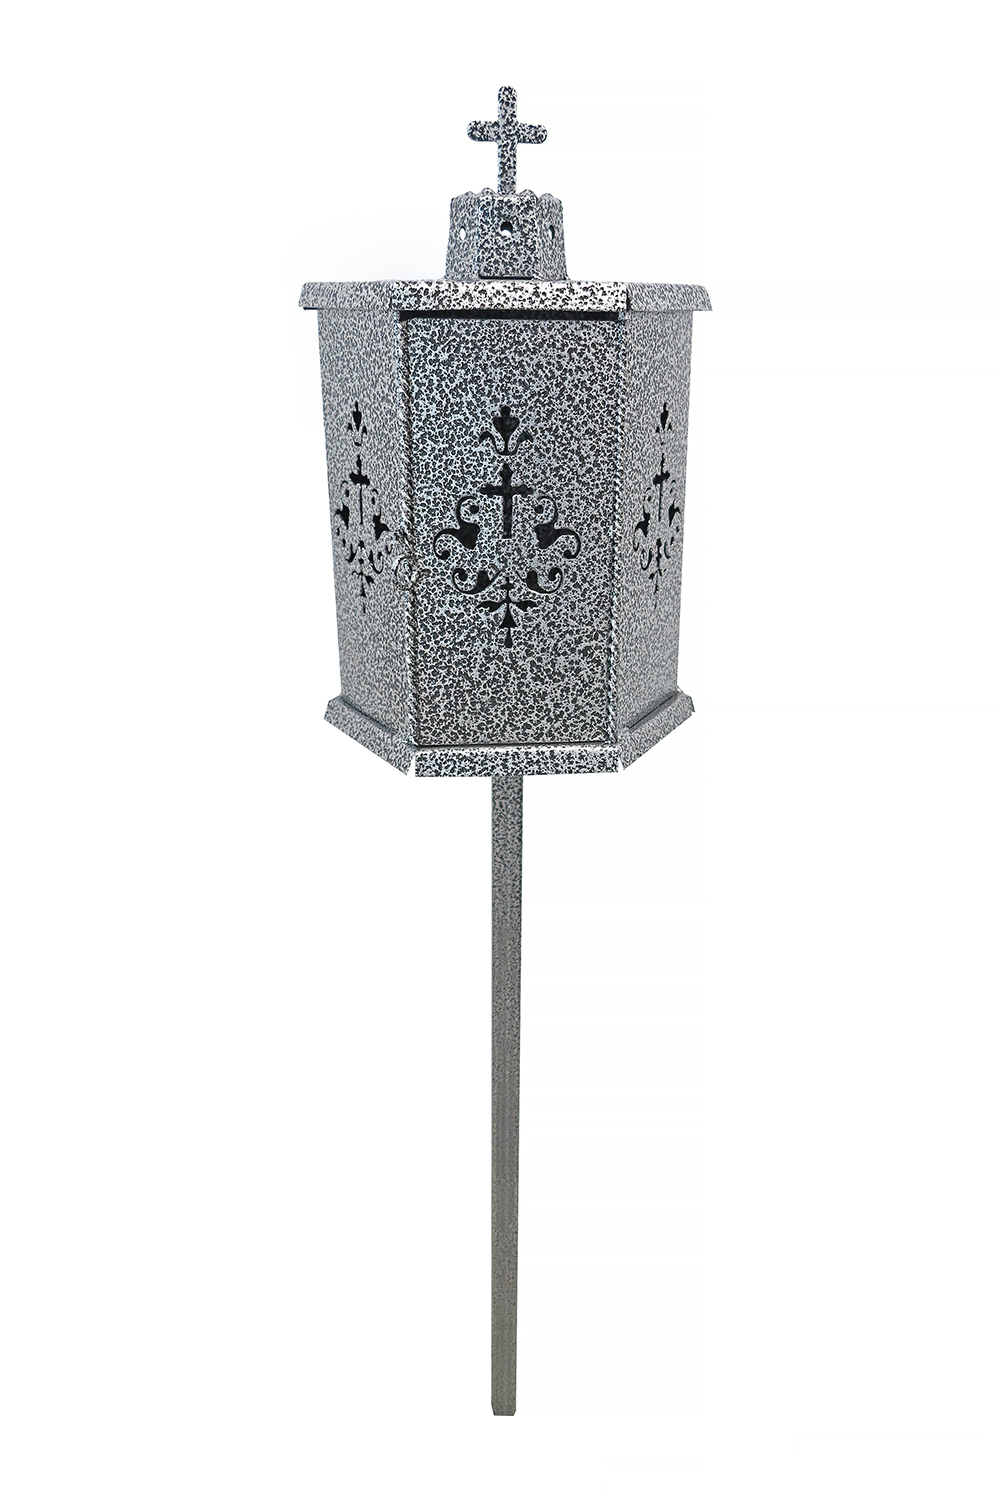 Felinar metalic pentru cimitir, GRS, F8, vopsit electrostatic, gri lovitura de ciocan, Gri, cu picior, 100×21 cm